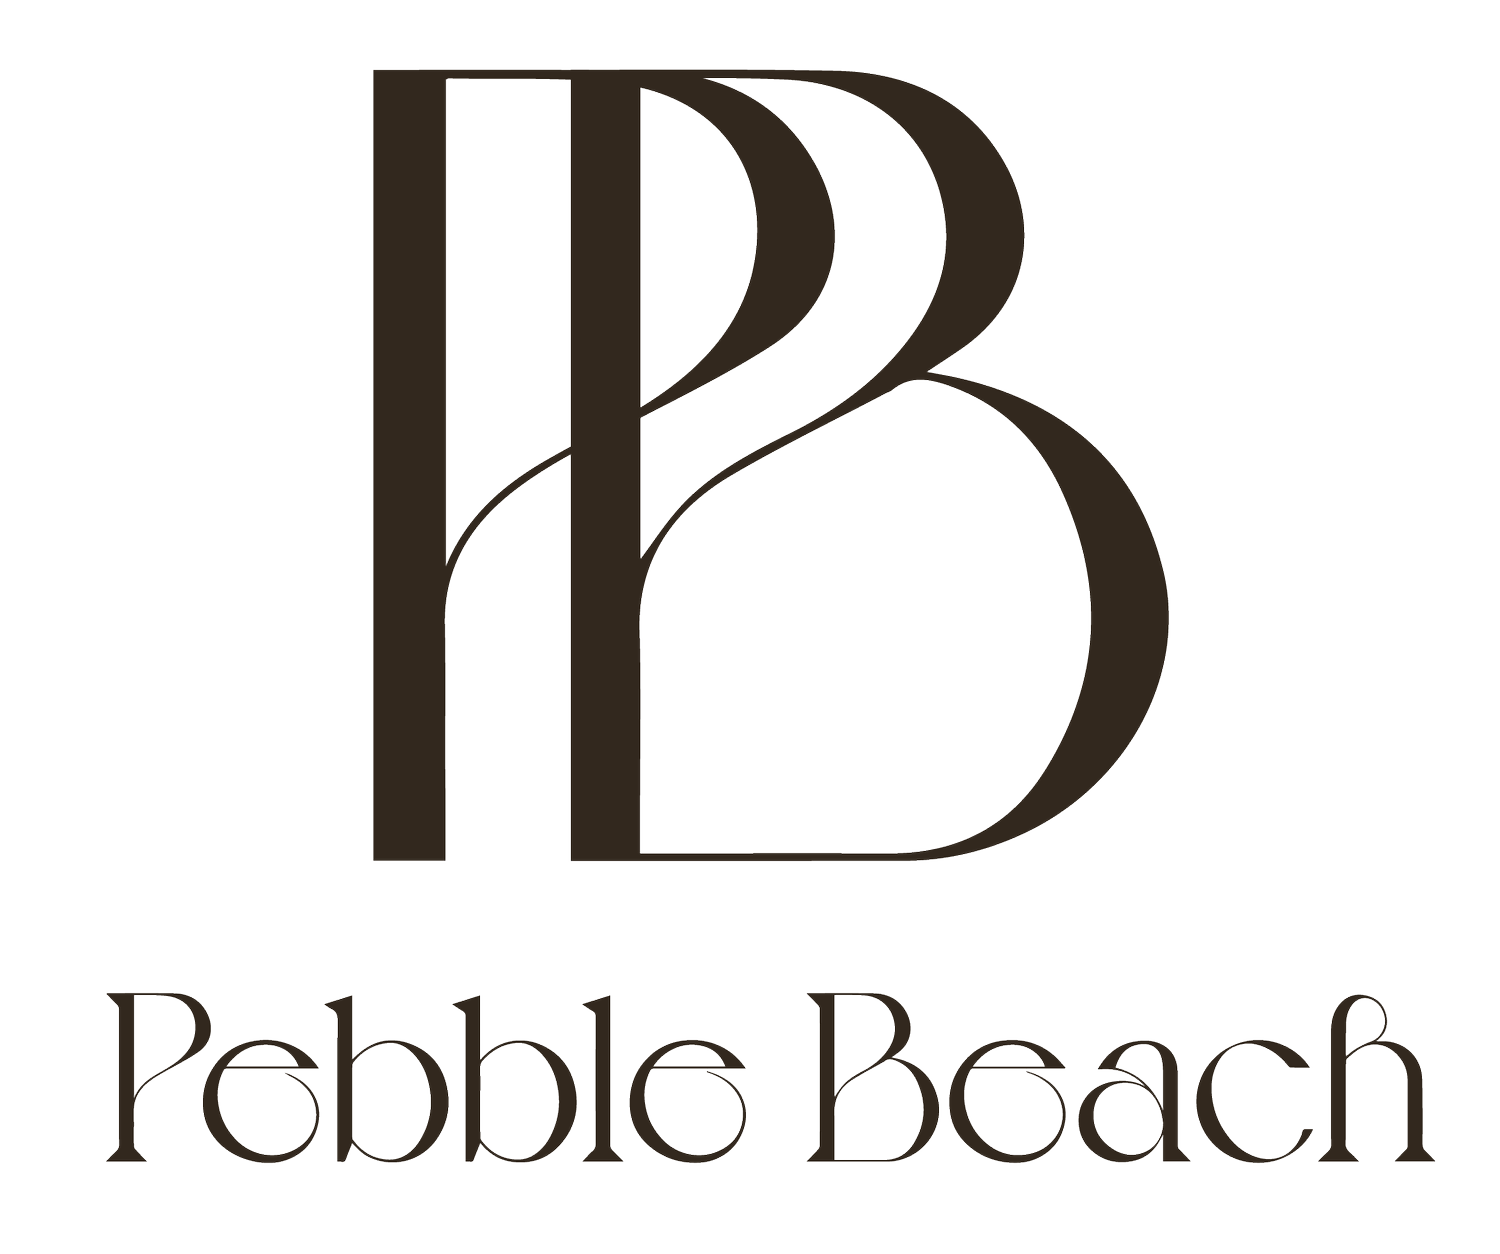 Pebble Beach Tower